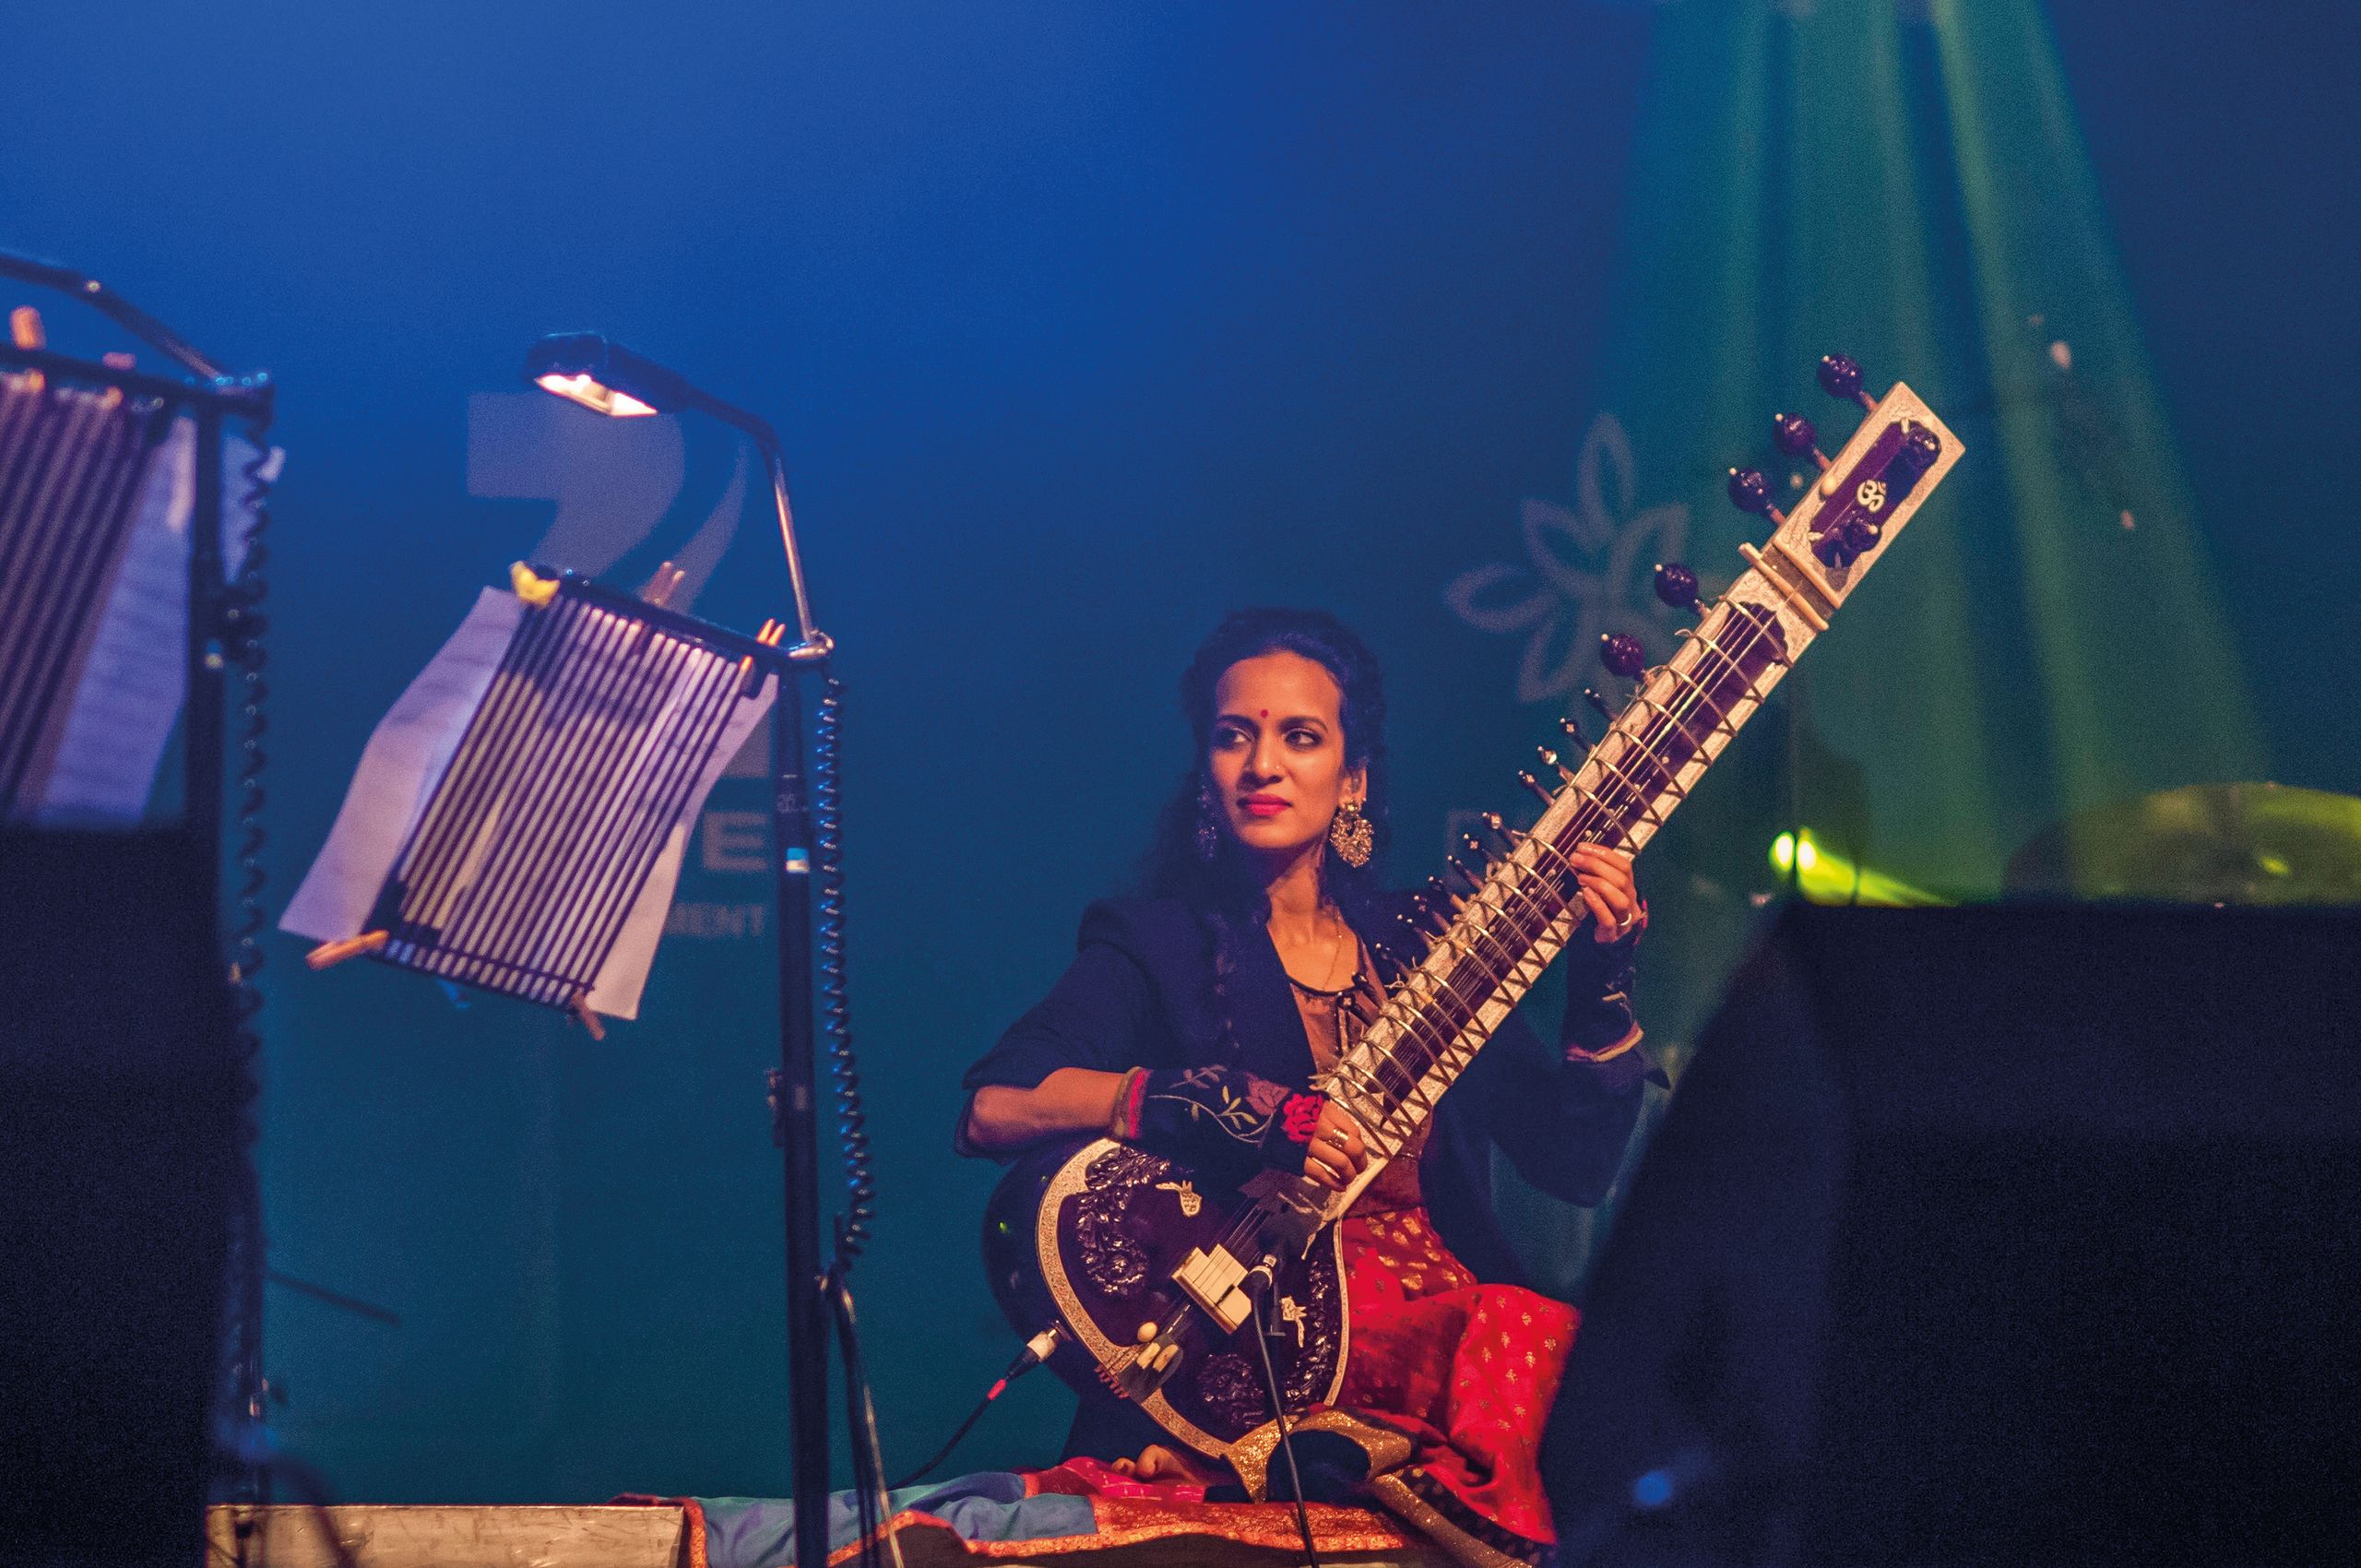 Anoushka Shankar on sitar